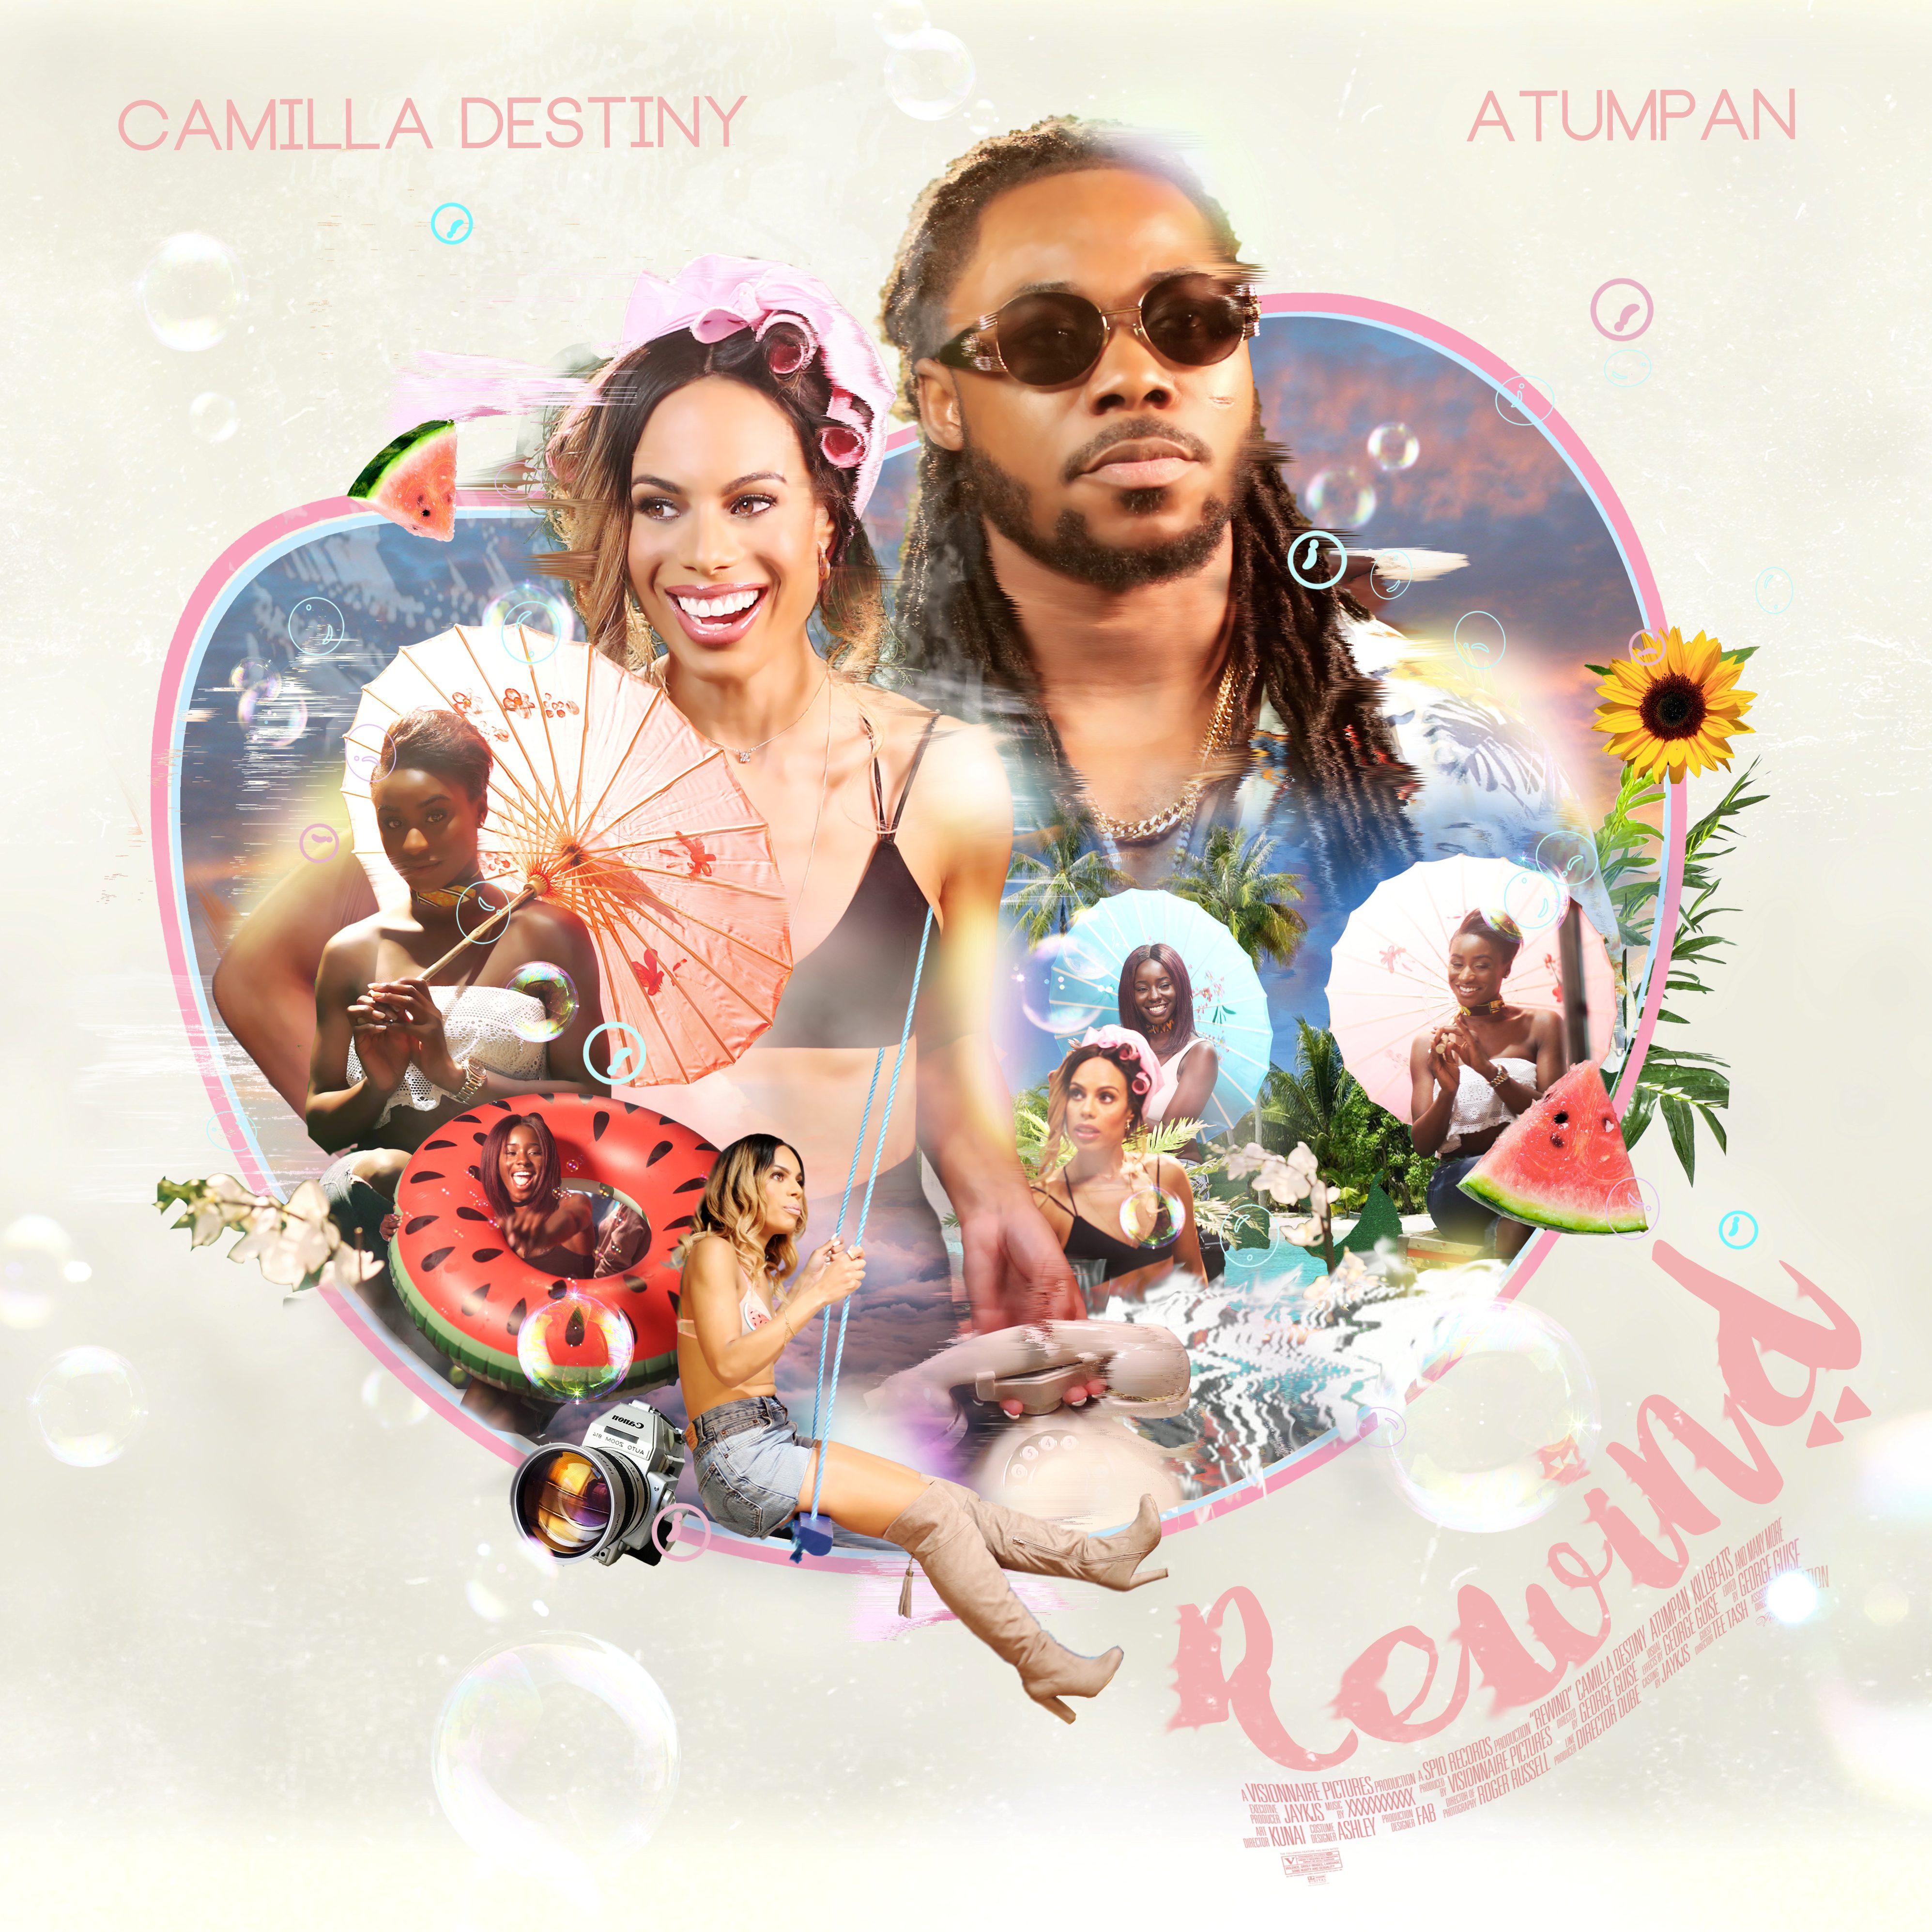 Video: Camilla Destiny – Rewind ft. Atumpan